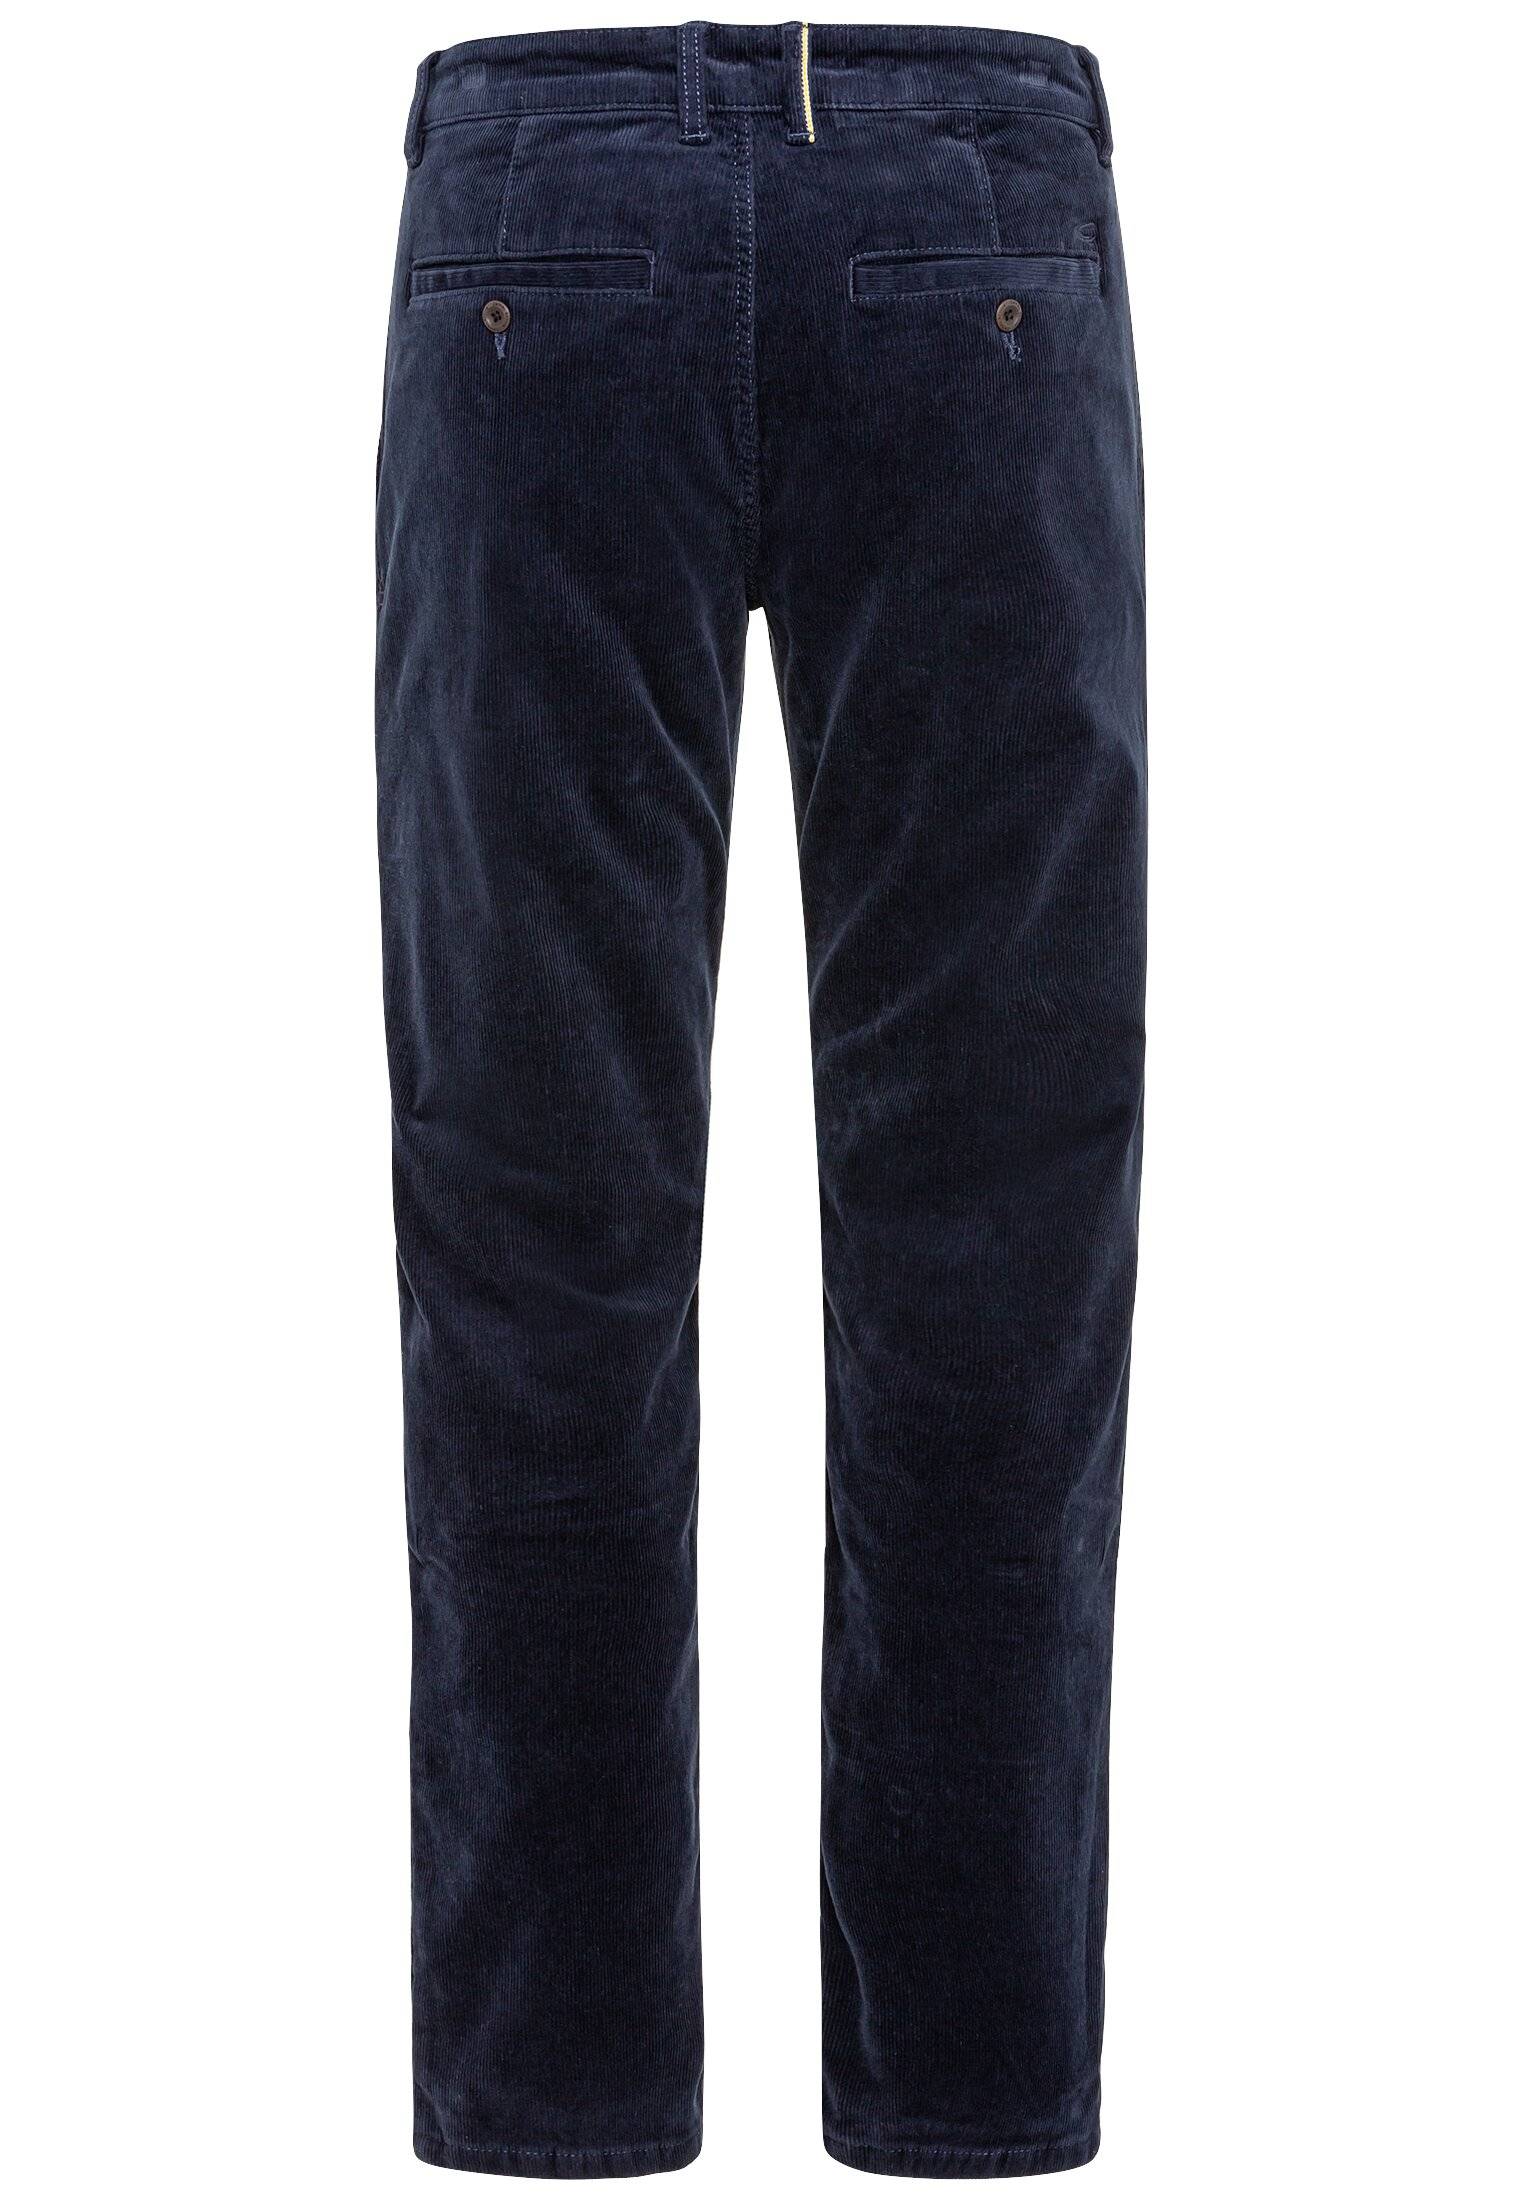 Мужские брюки Camel Active, синие, цвет синий, размер 34 - фото 2